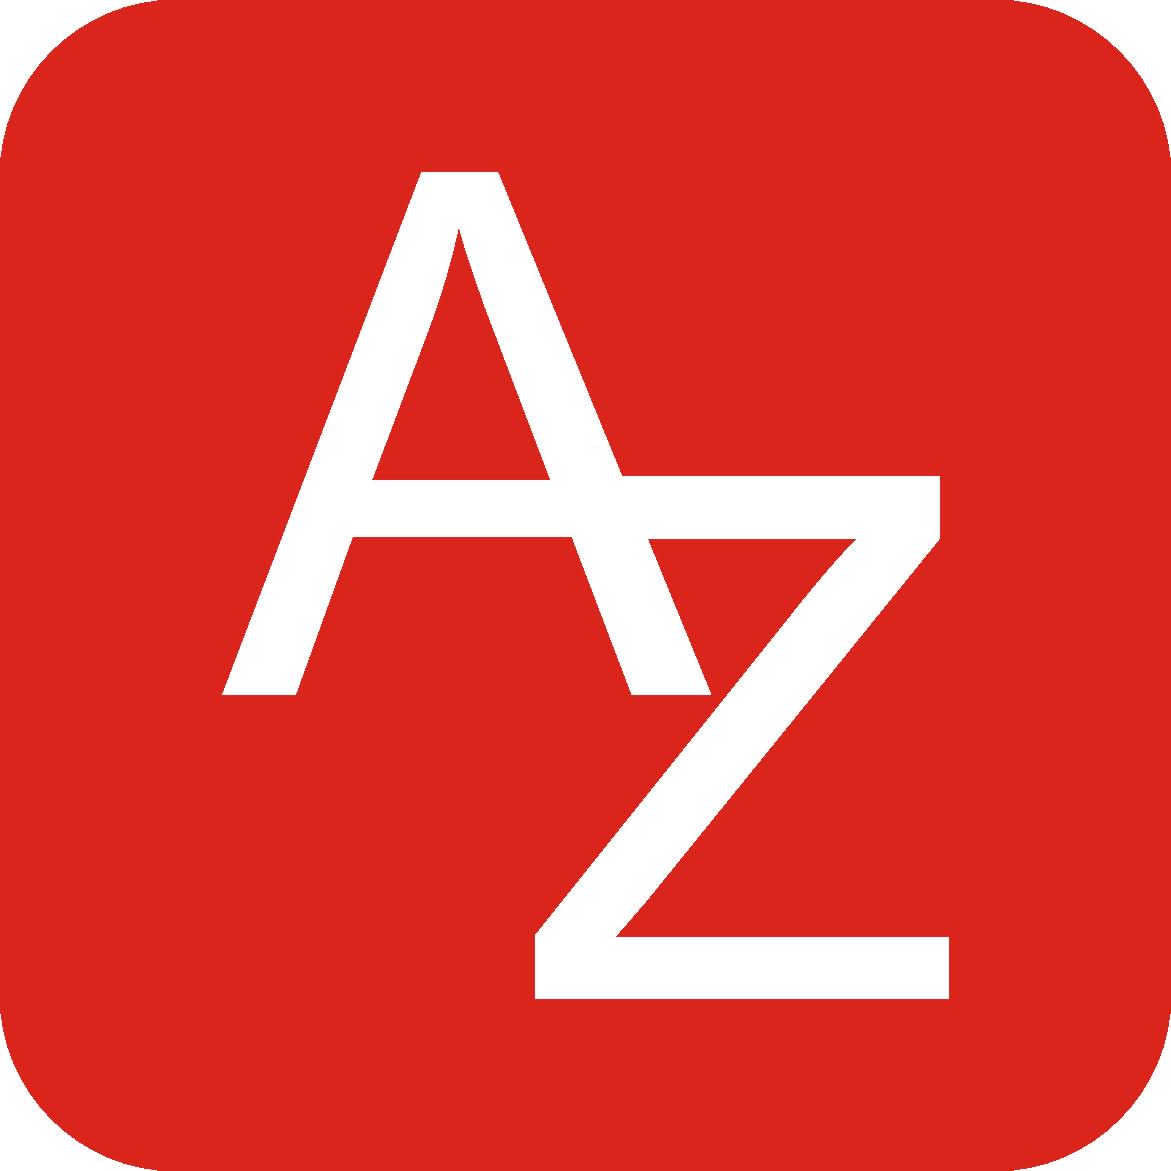 AppZoro Technologies, Inc. profile on Qualified.One